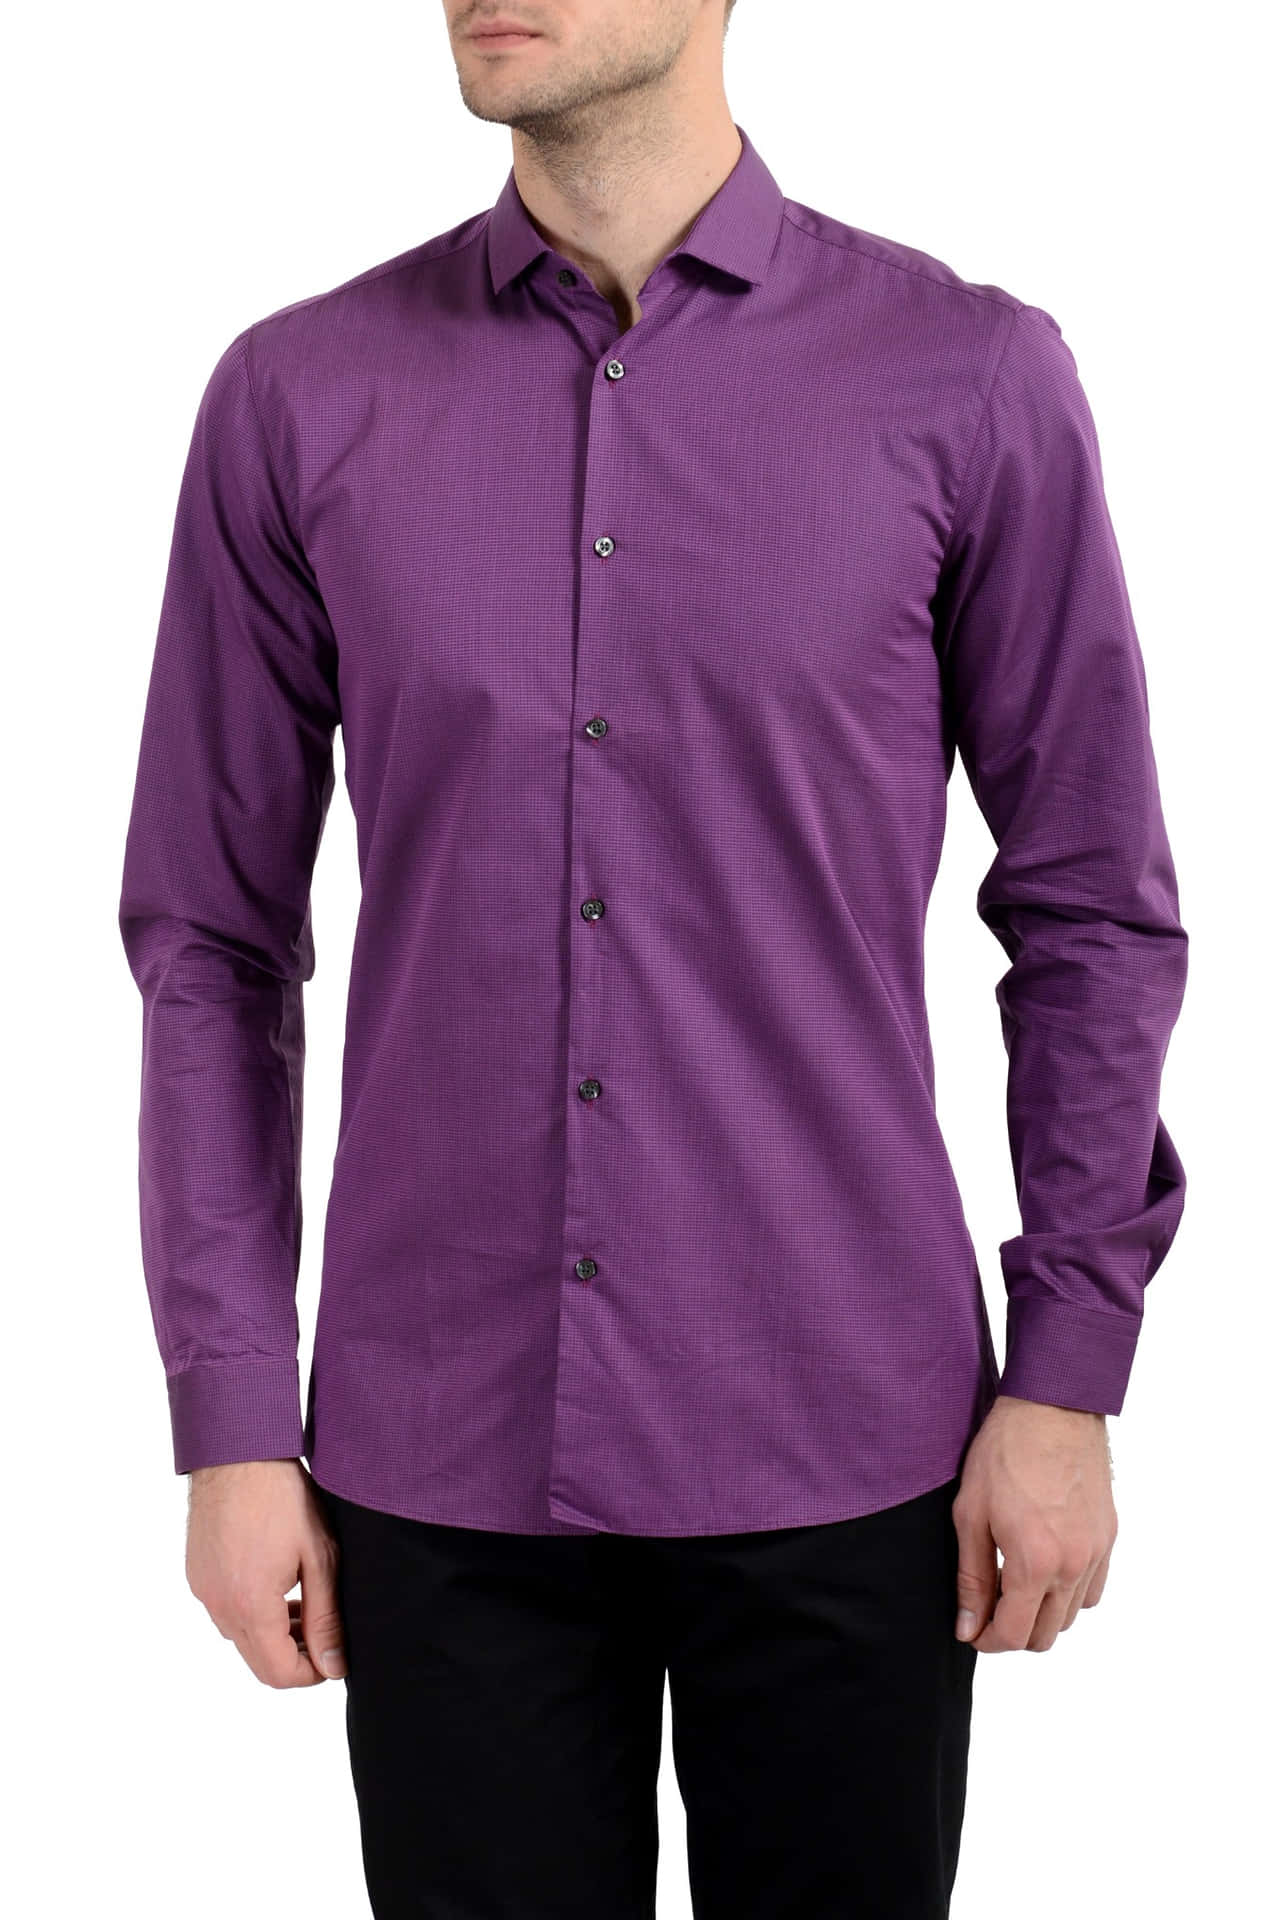 Purple Shirt Wallpaper